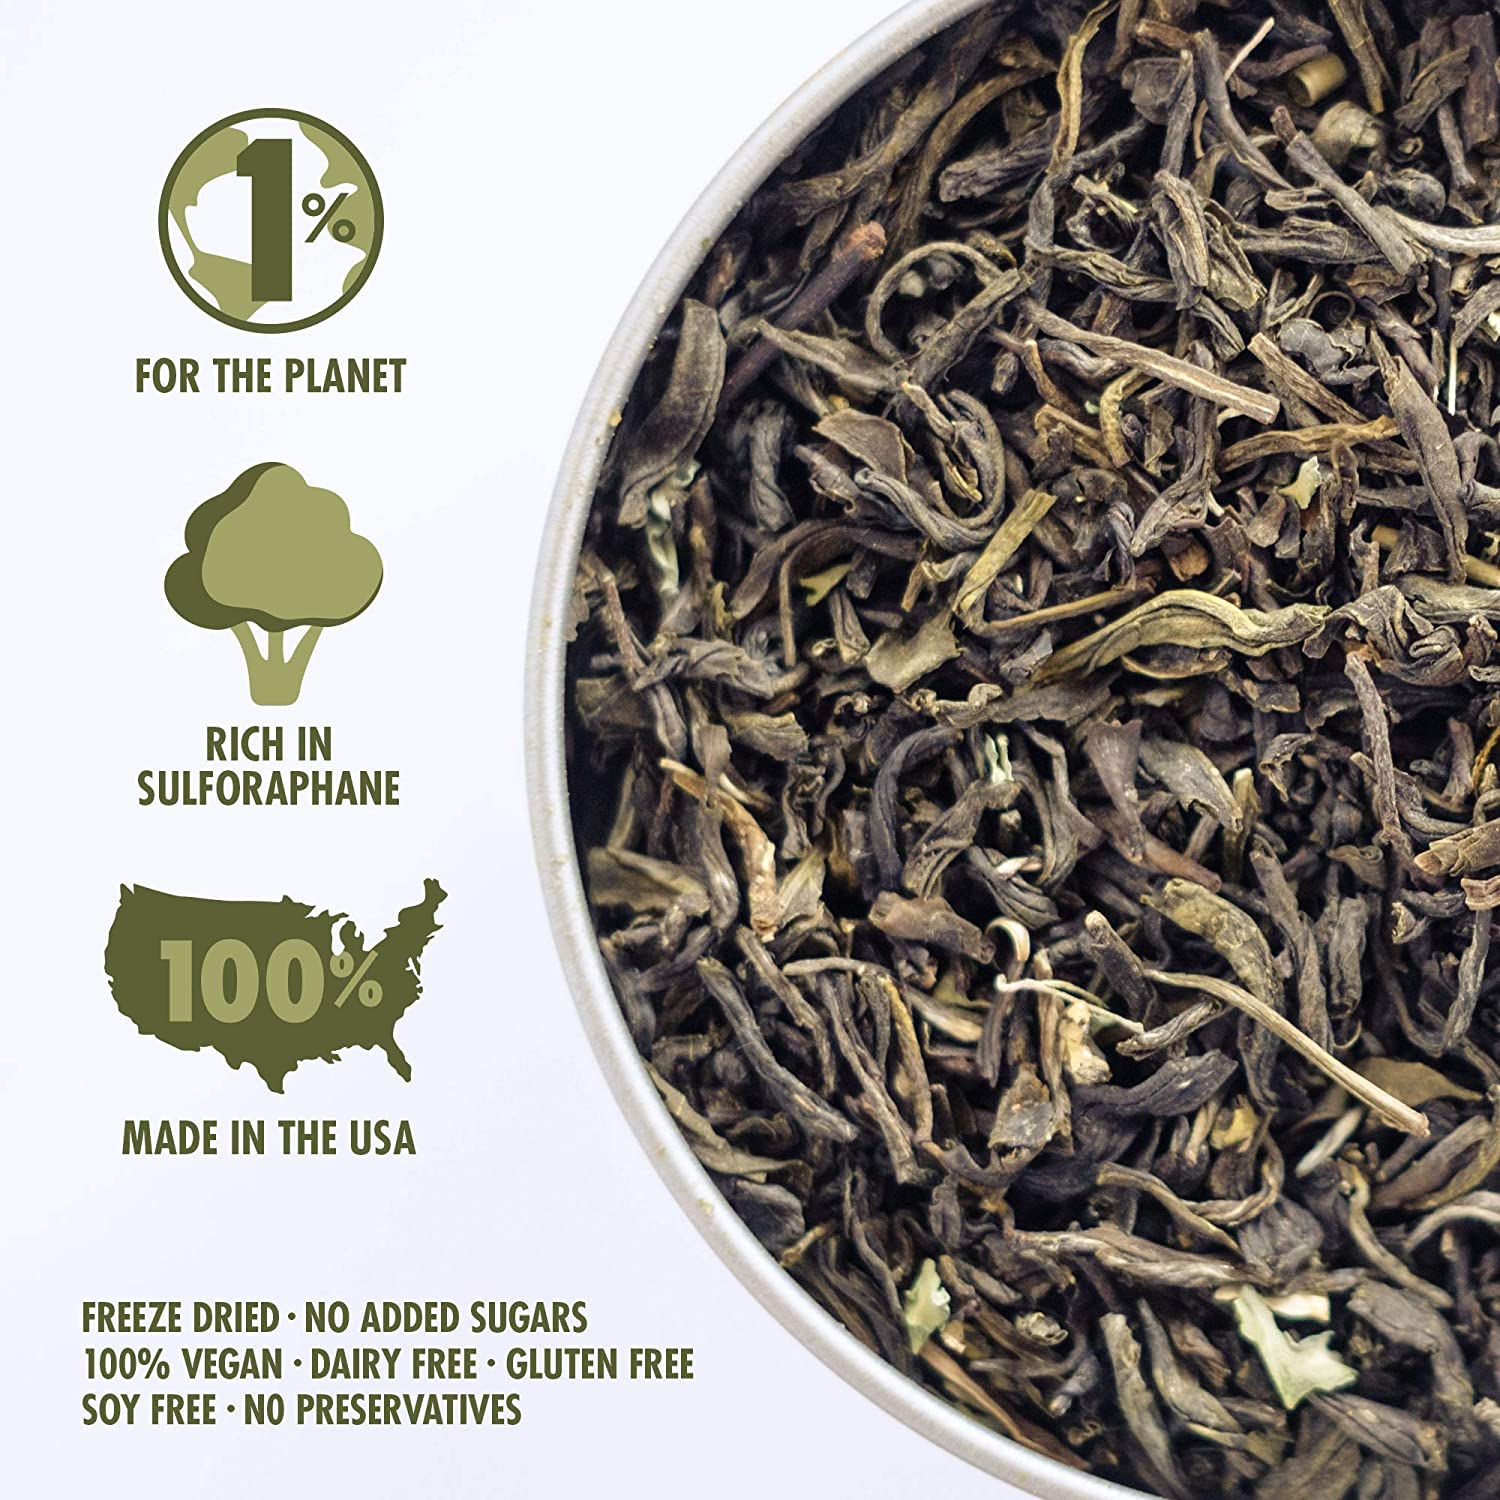 Focus - Green Tea (Lightly Caffeinated)  Beyond Microgreens   